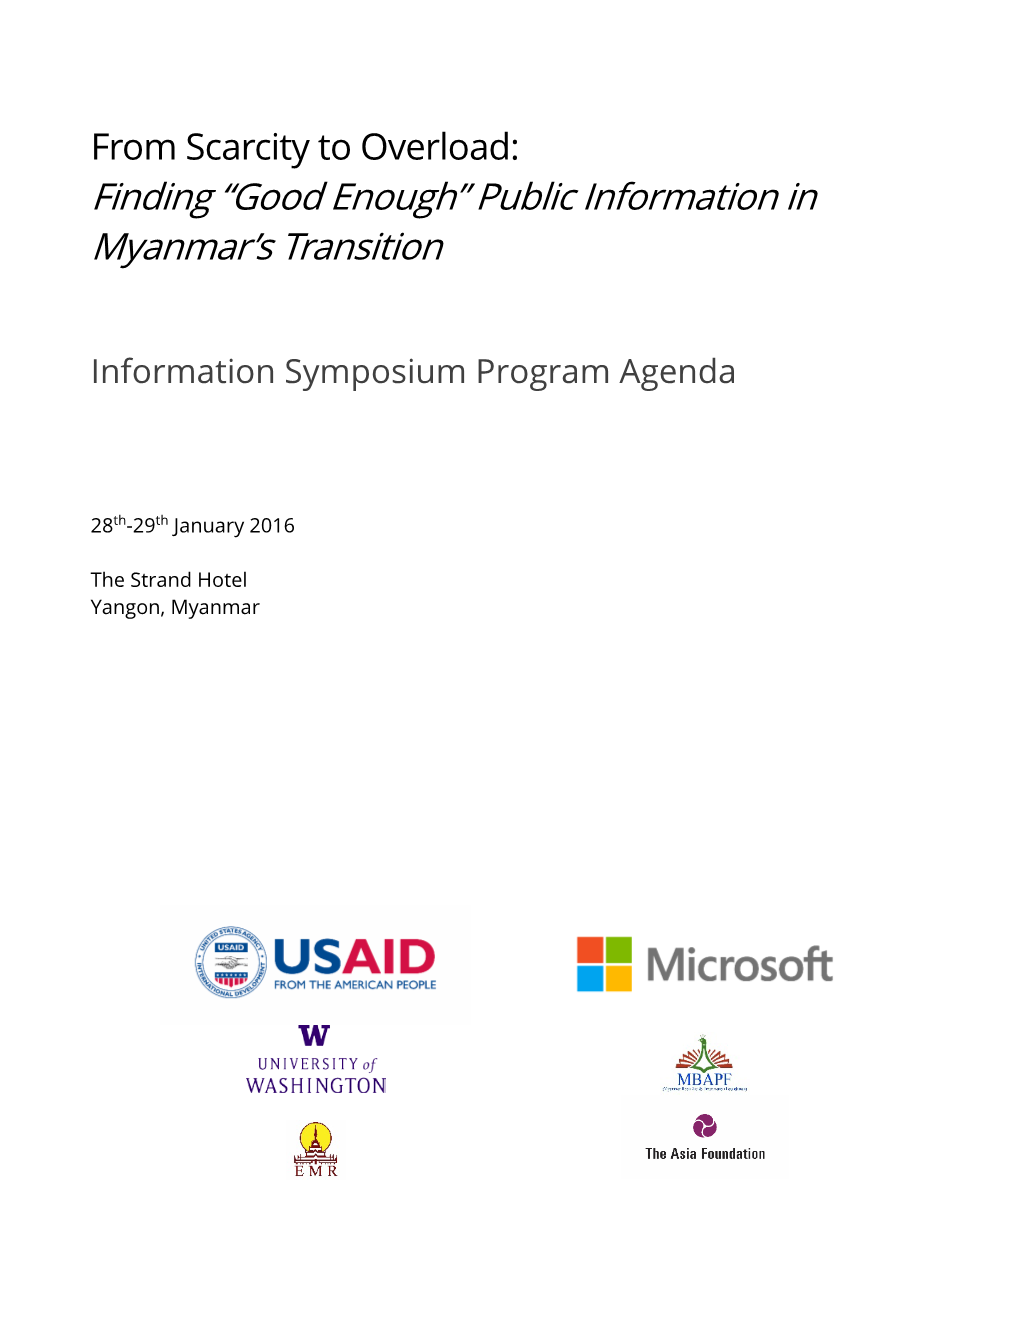 Public Information in Myanmar's Transition